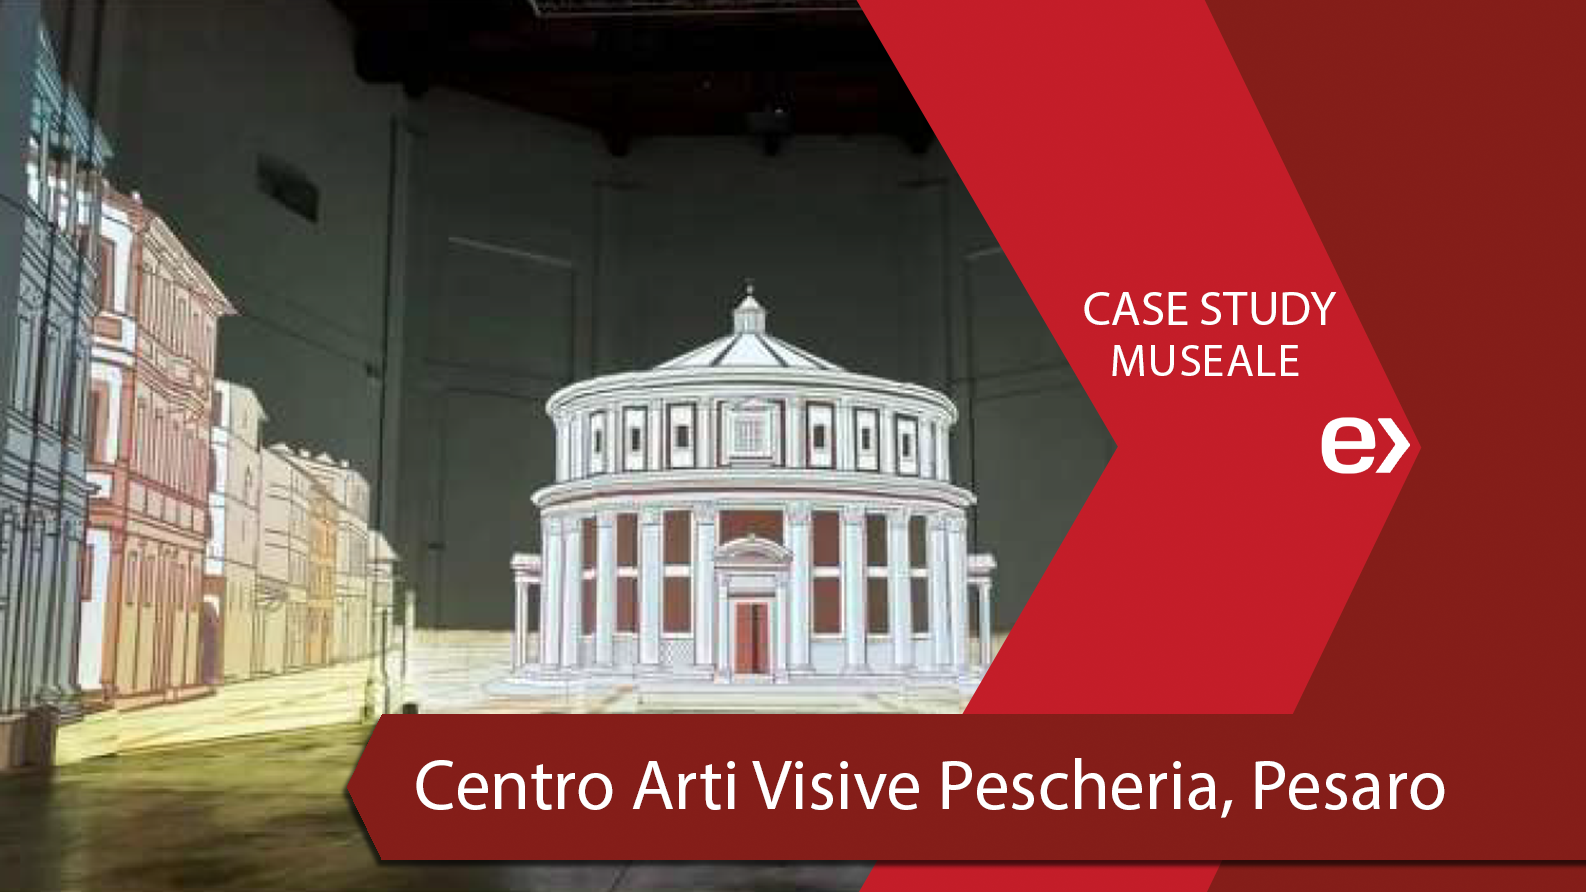 Centro Arti Visive Pescheria, Pesaro